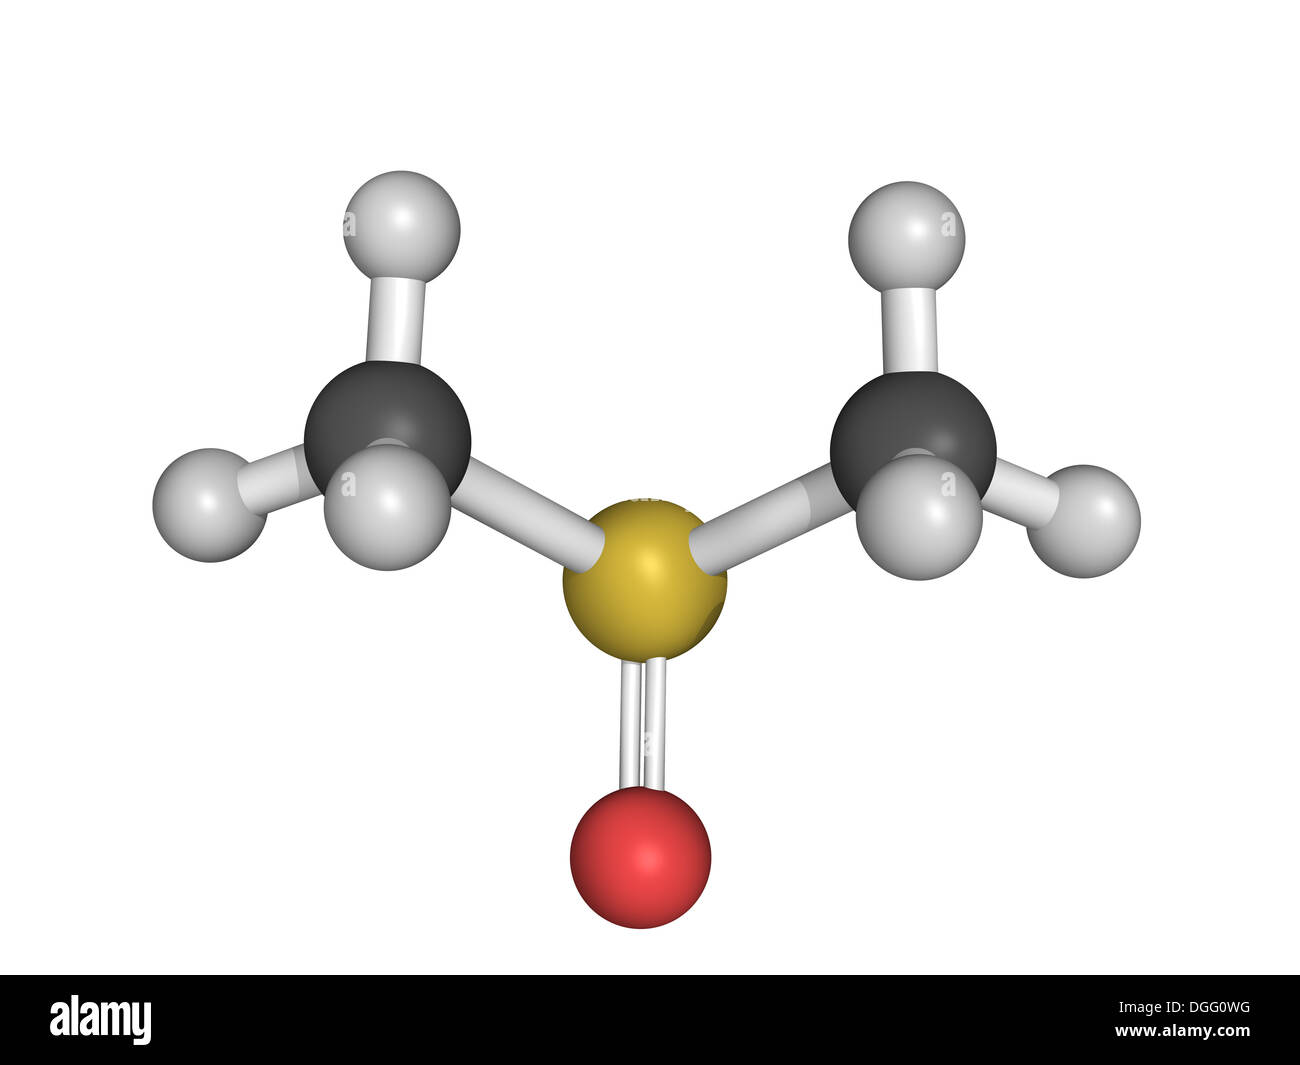 Molecular structure of dimethyl sulfoxide (DMSO)